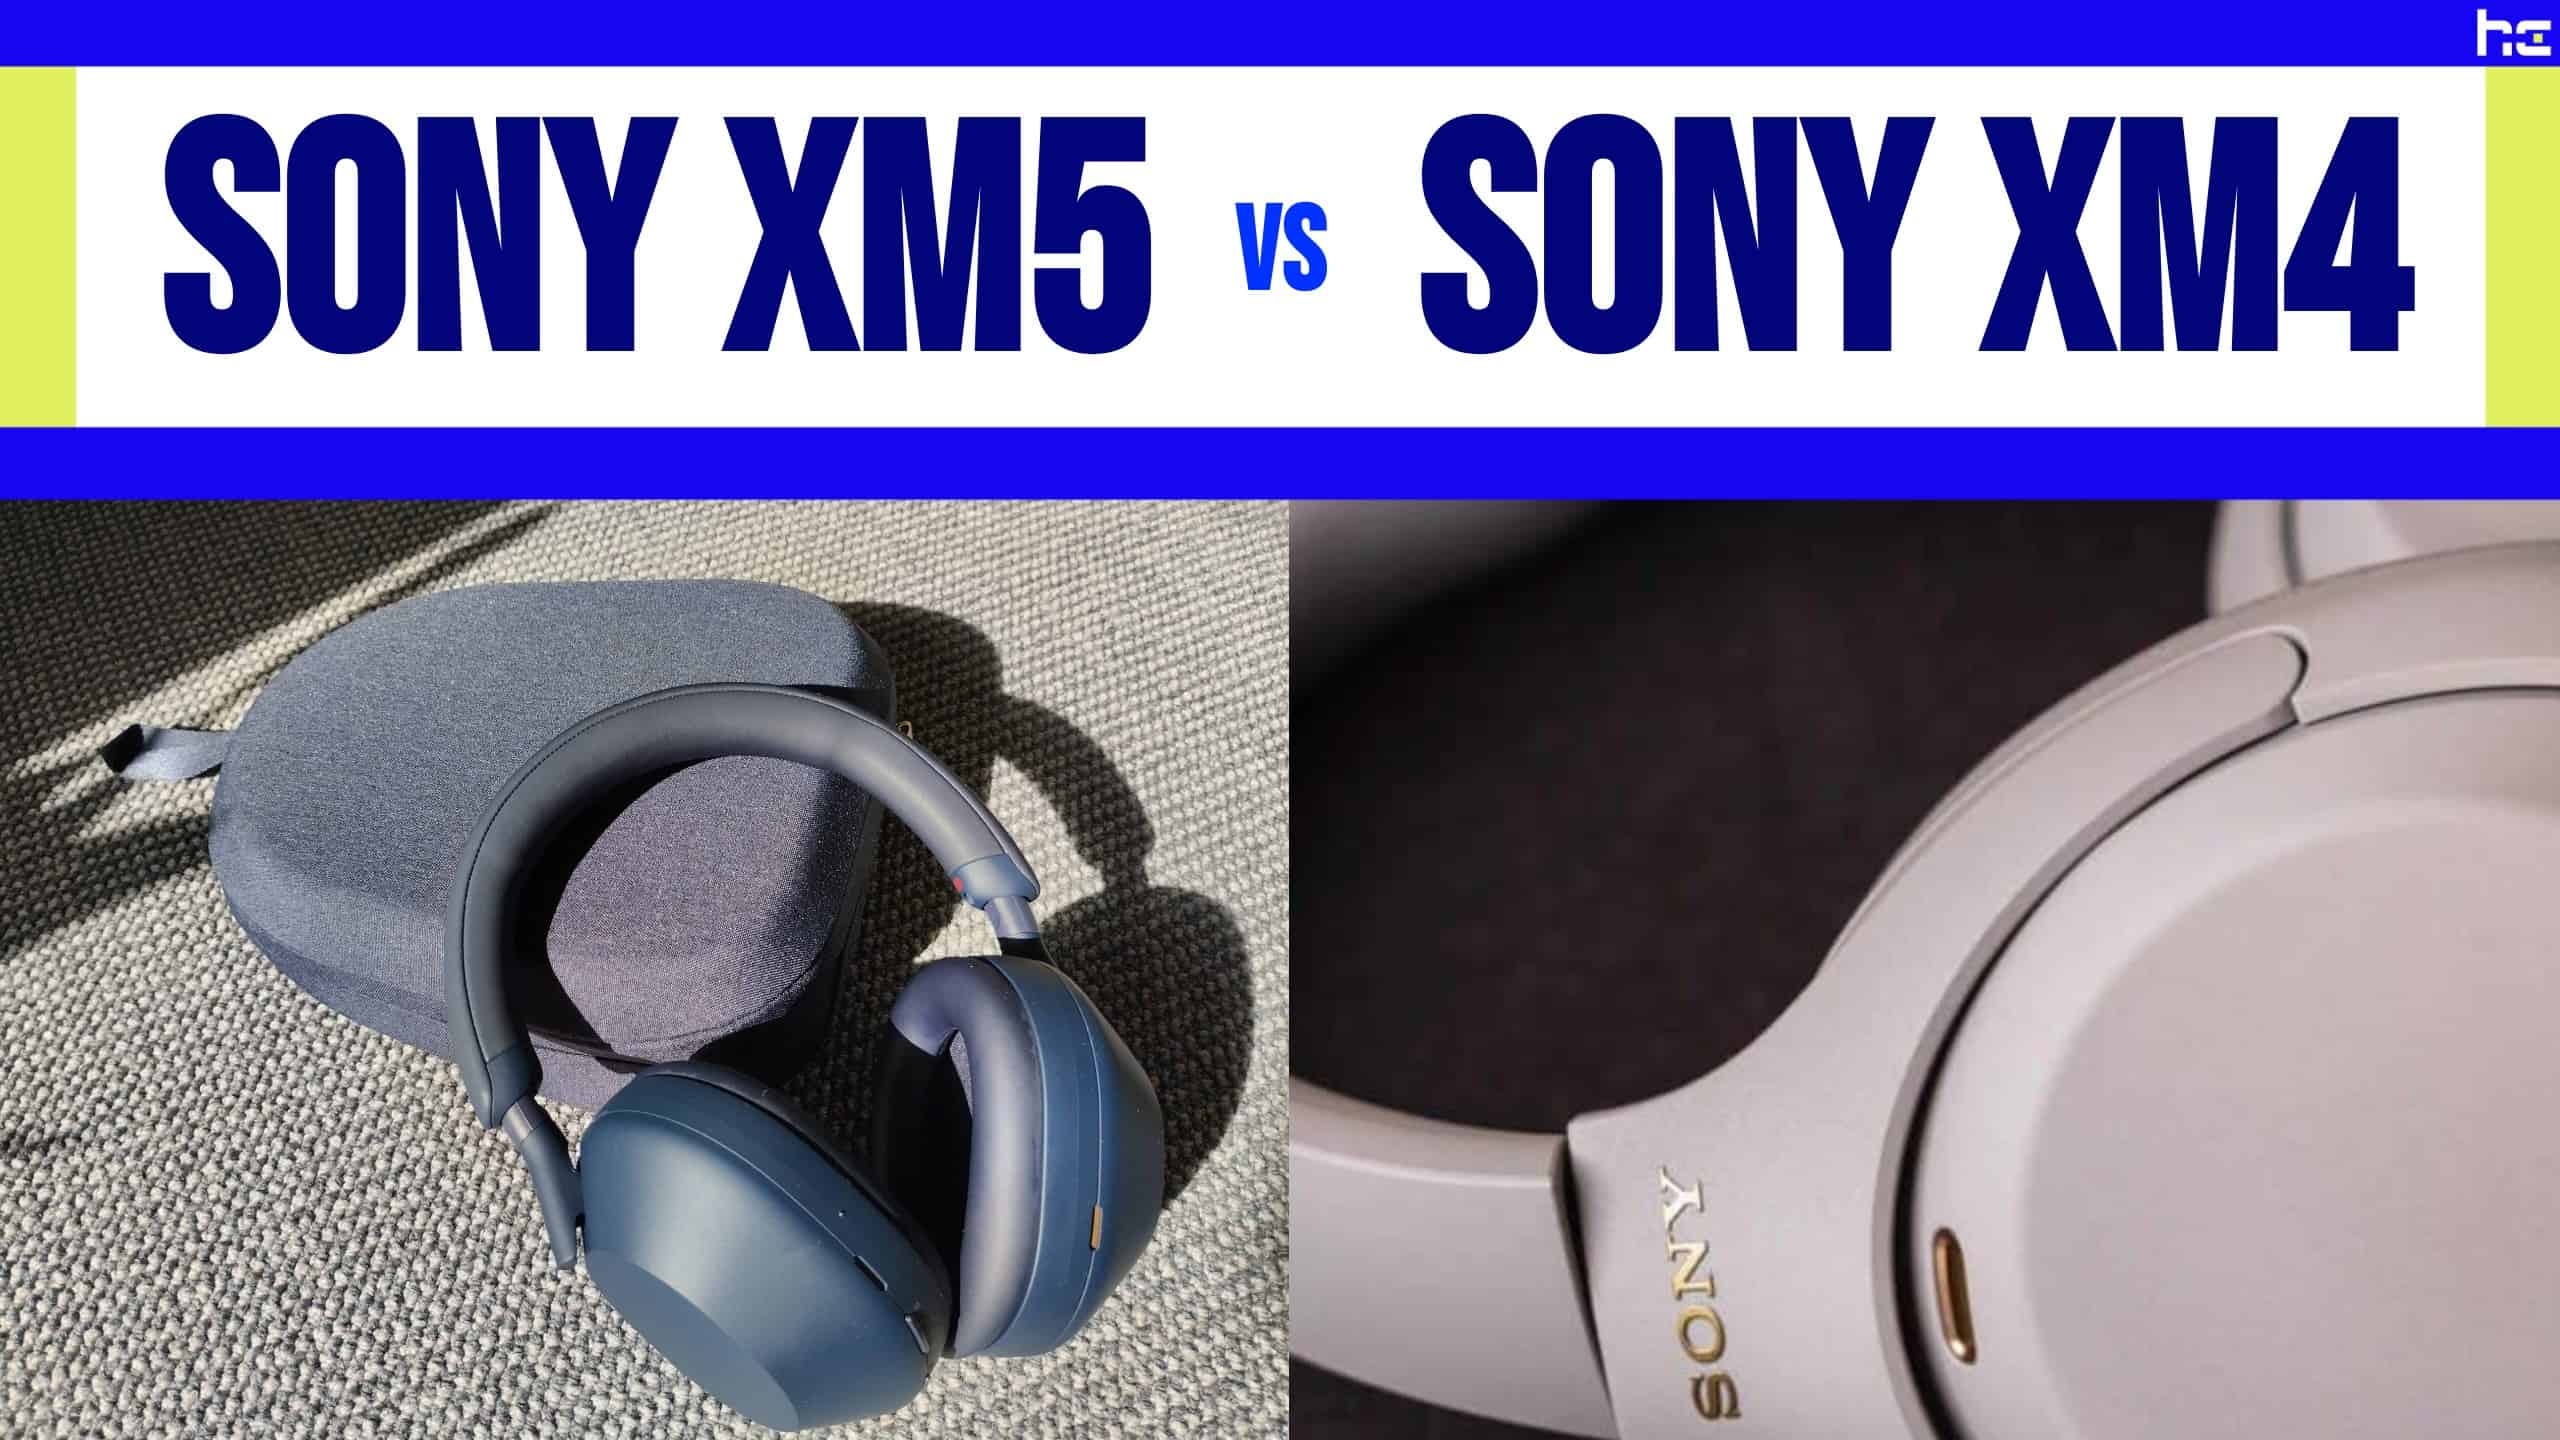 Sony XM5 vs Sony XM4 featured image